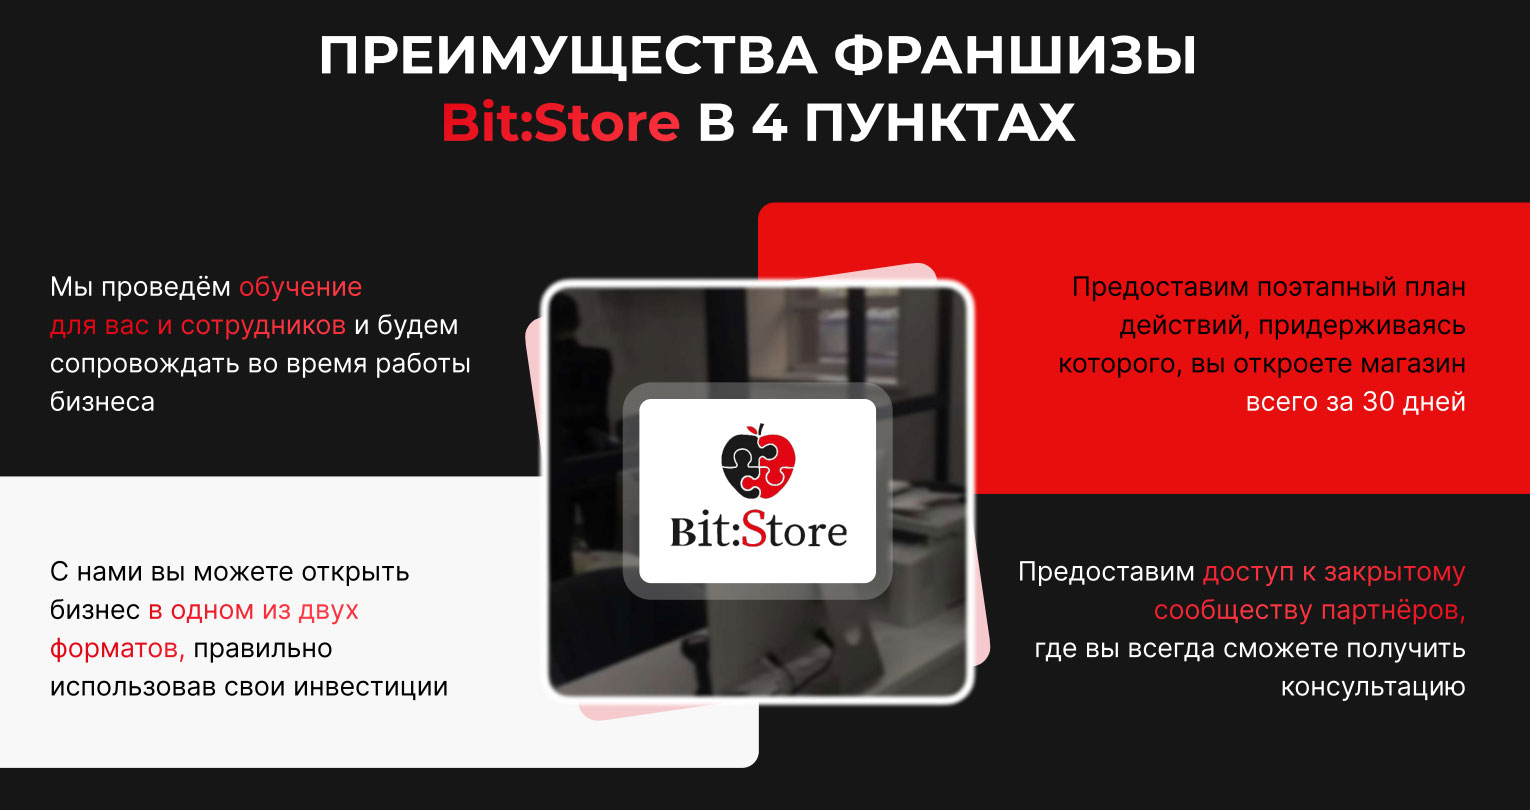 Bit:Store — франшиза магазина оригинальной техники Apple